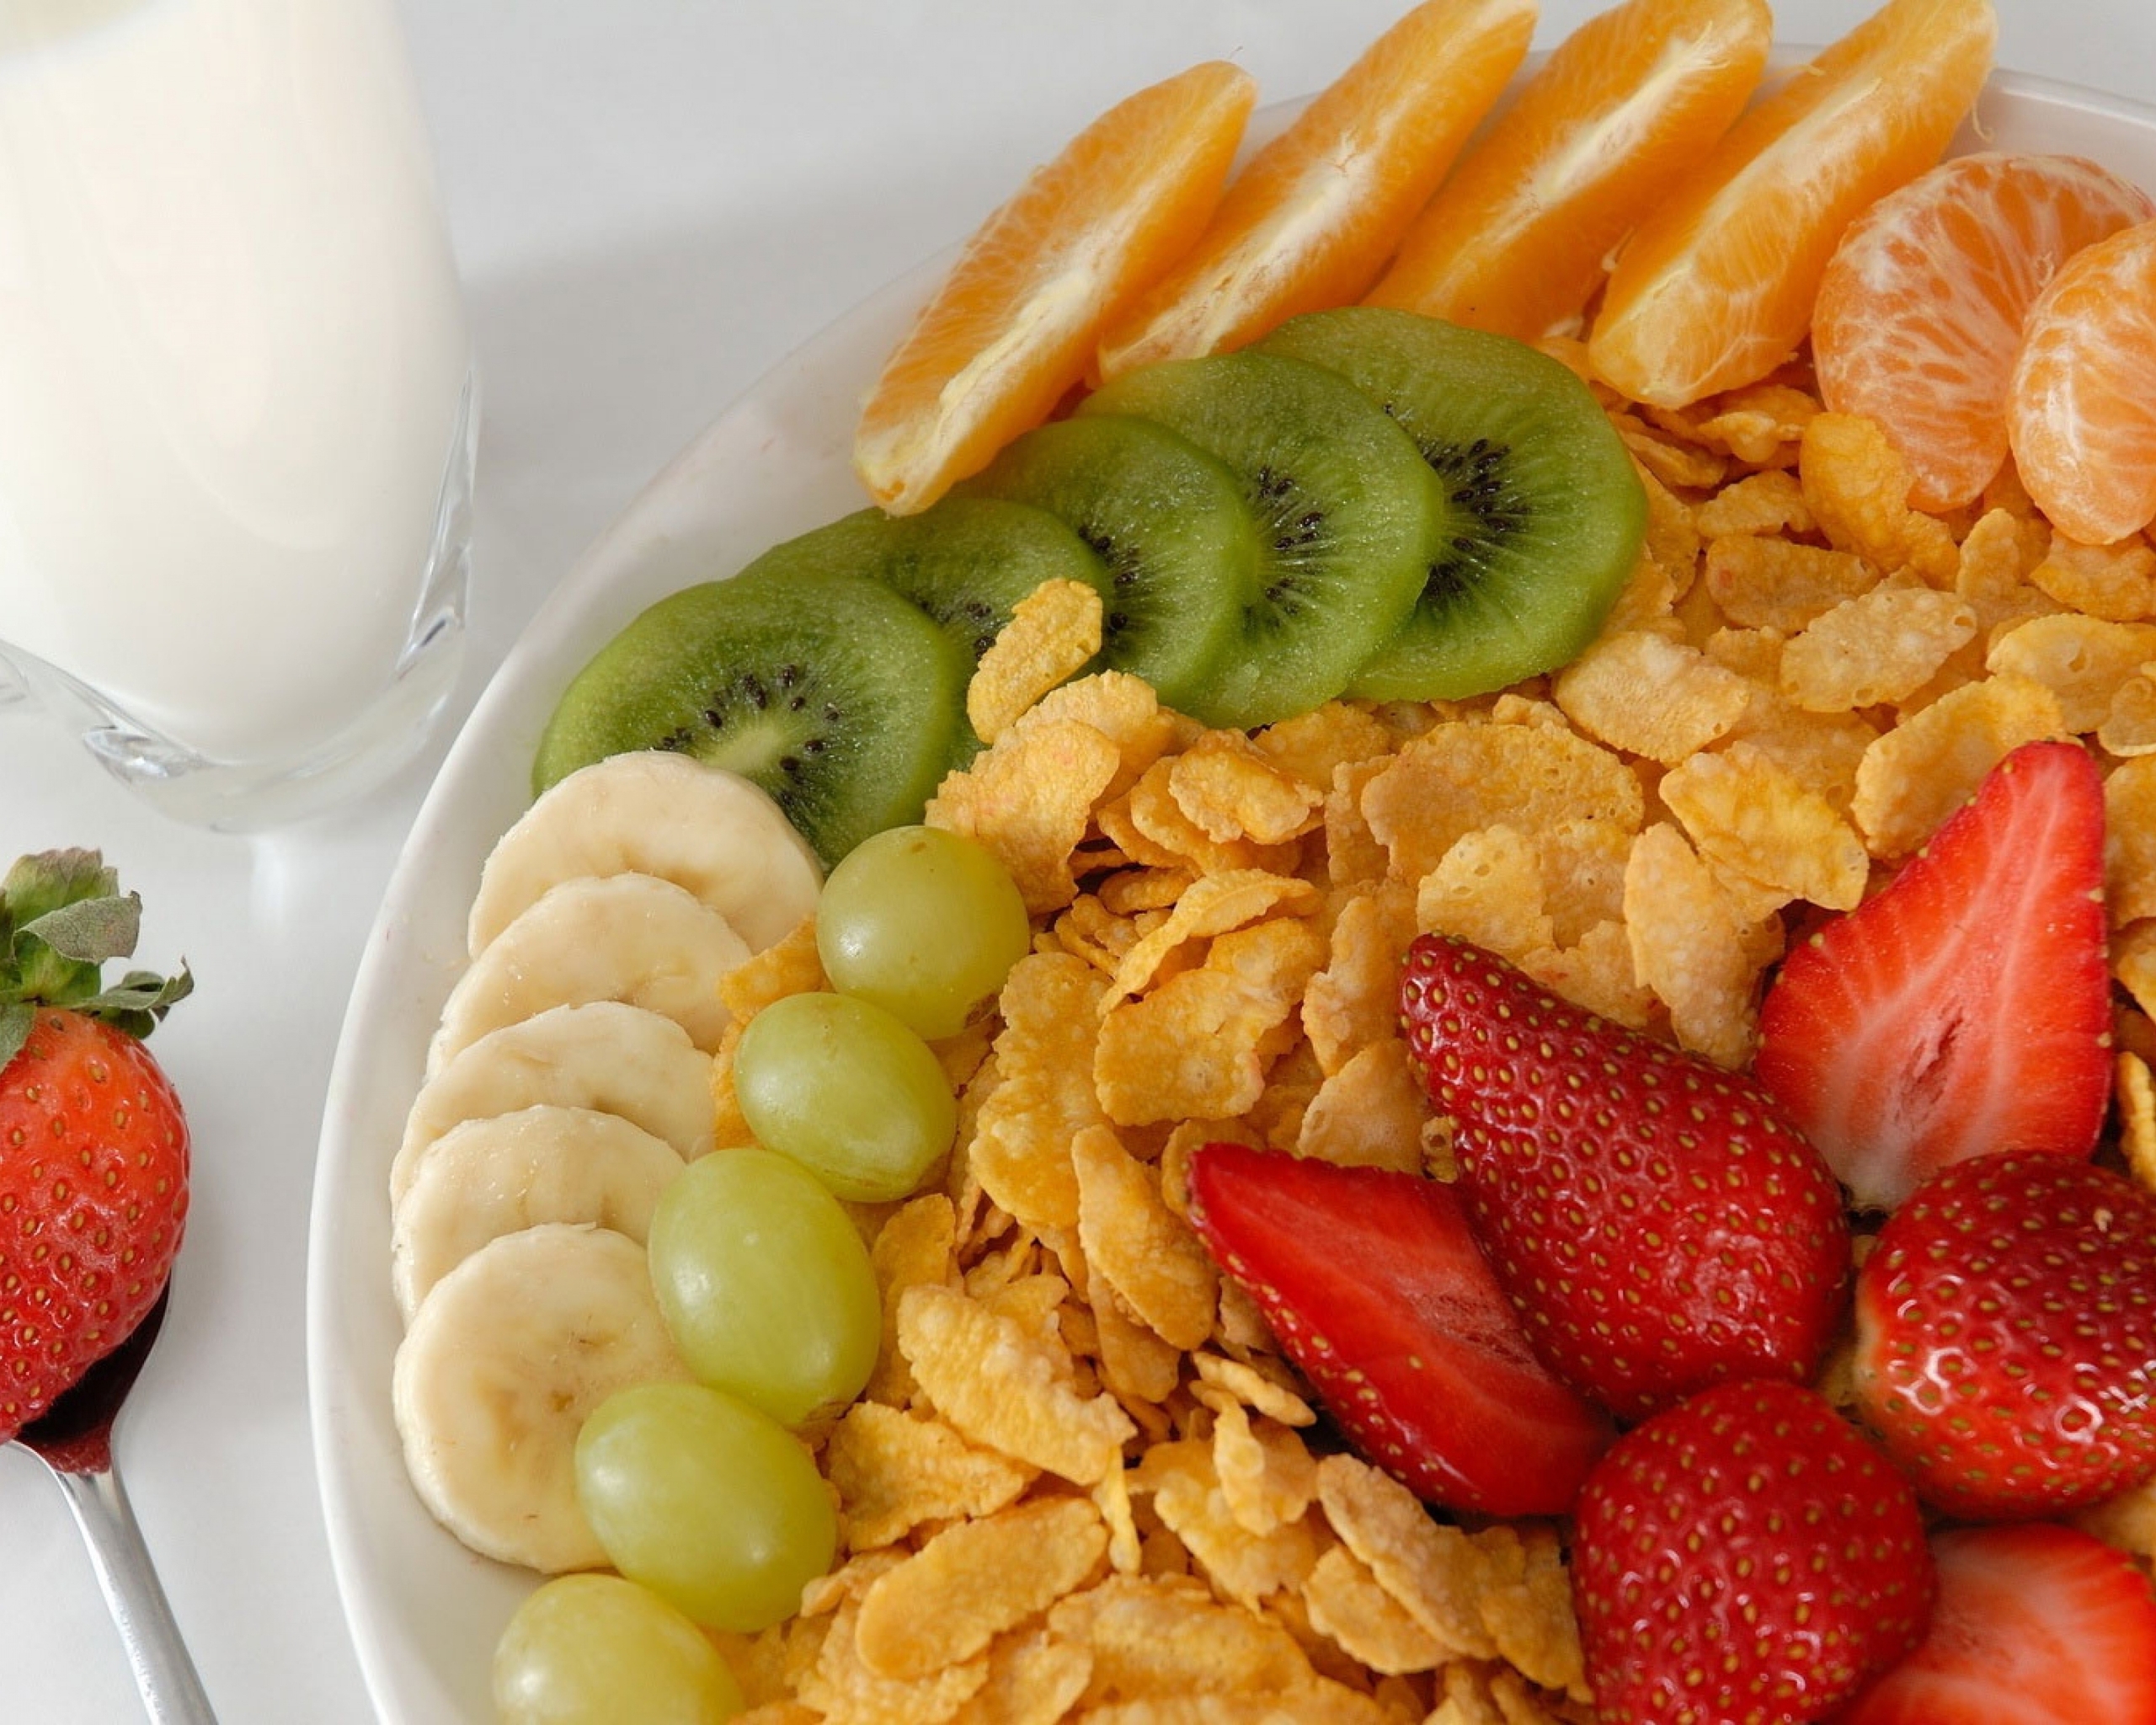 Image: Strawberry, banana, grape, kiwi, tangerine, fruit, cereal